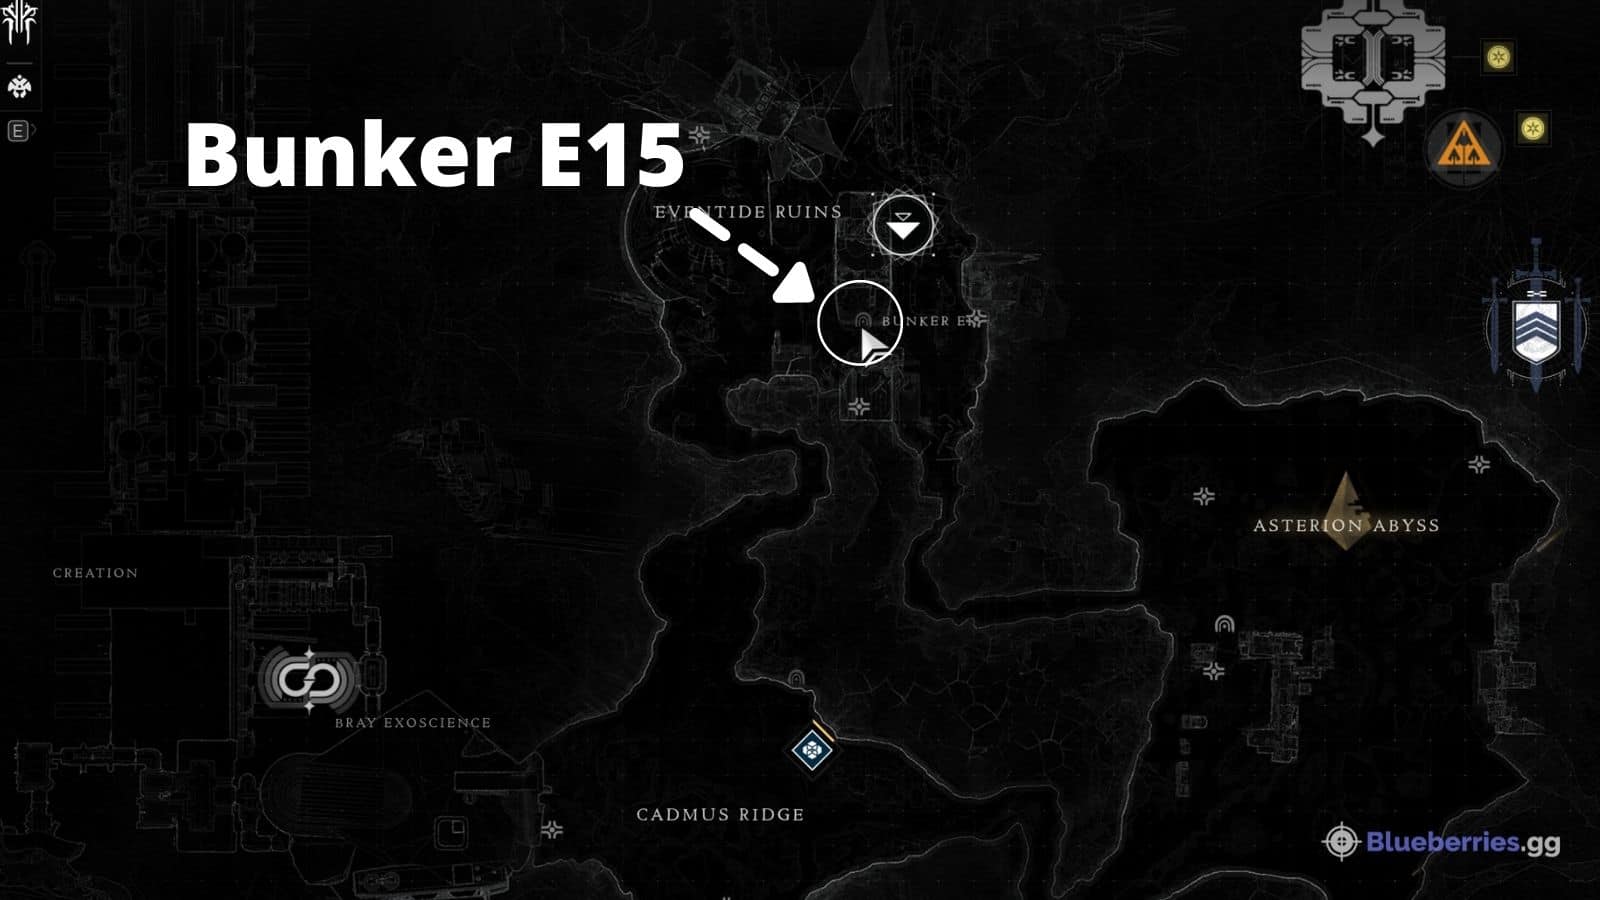 Best Lost Sector To Farm Bunker E15 Lost Sector Destiny 2: Location & Loadouts